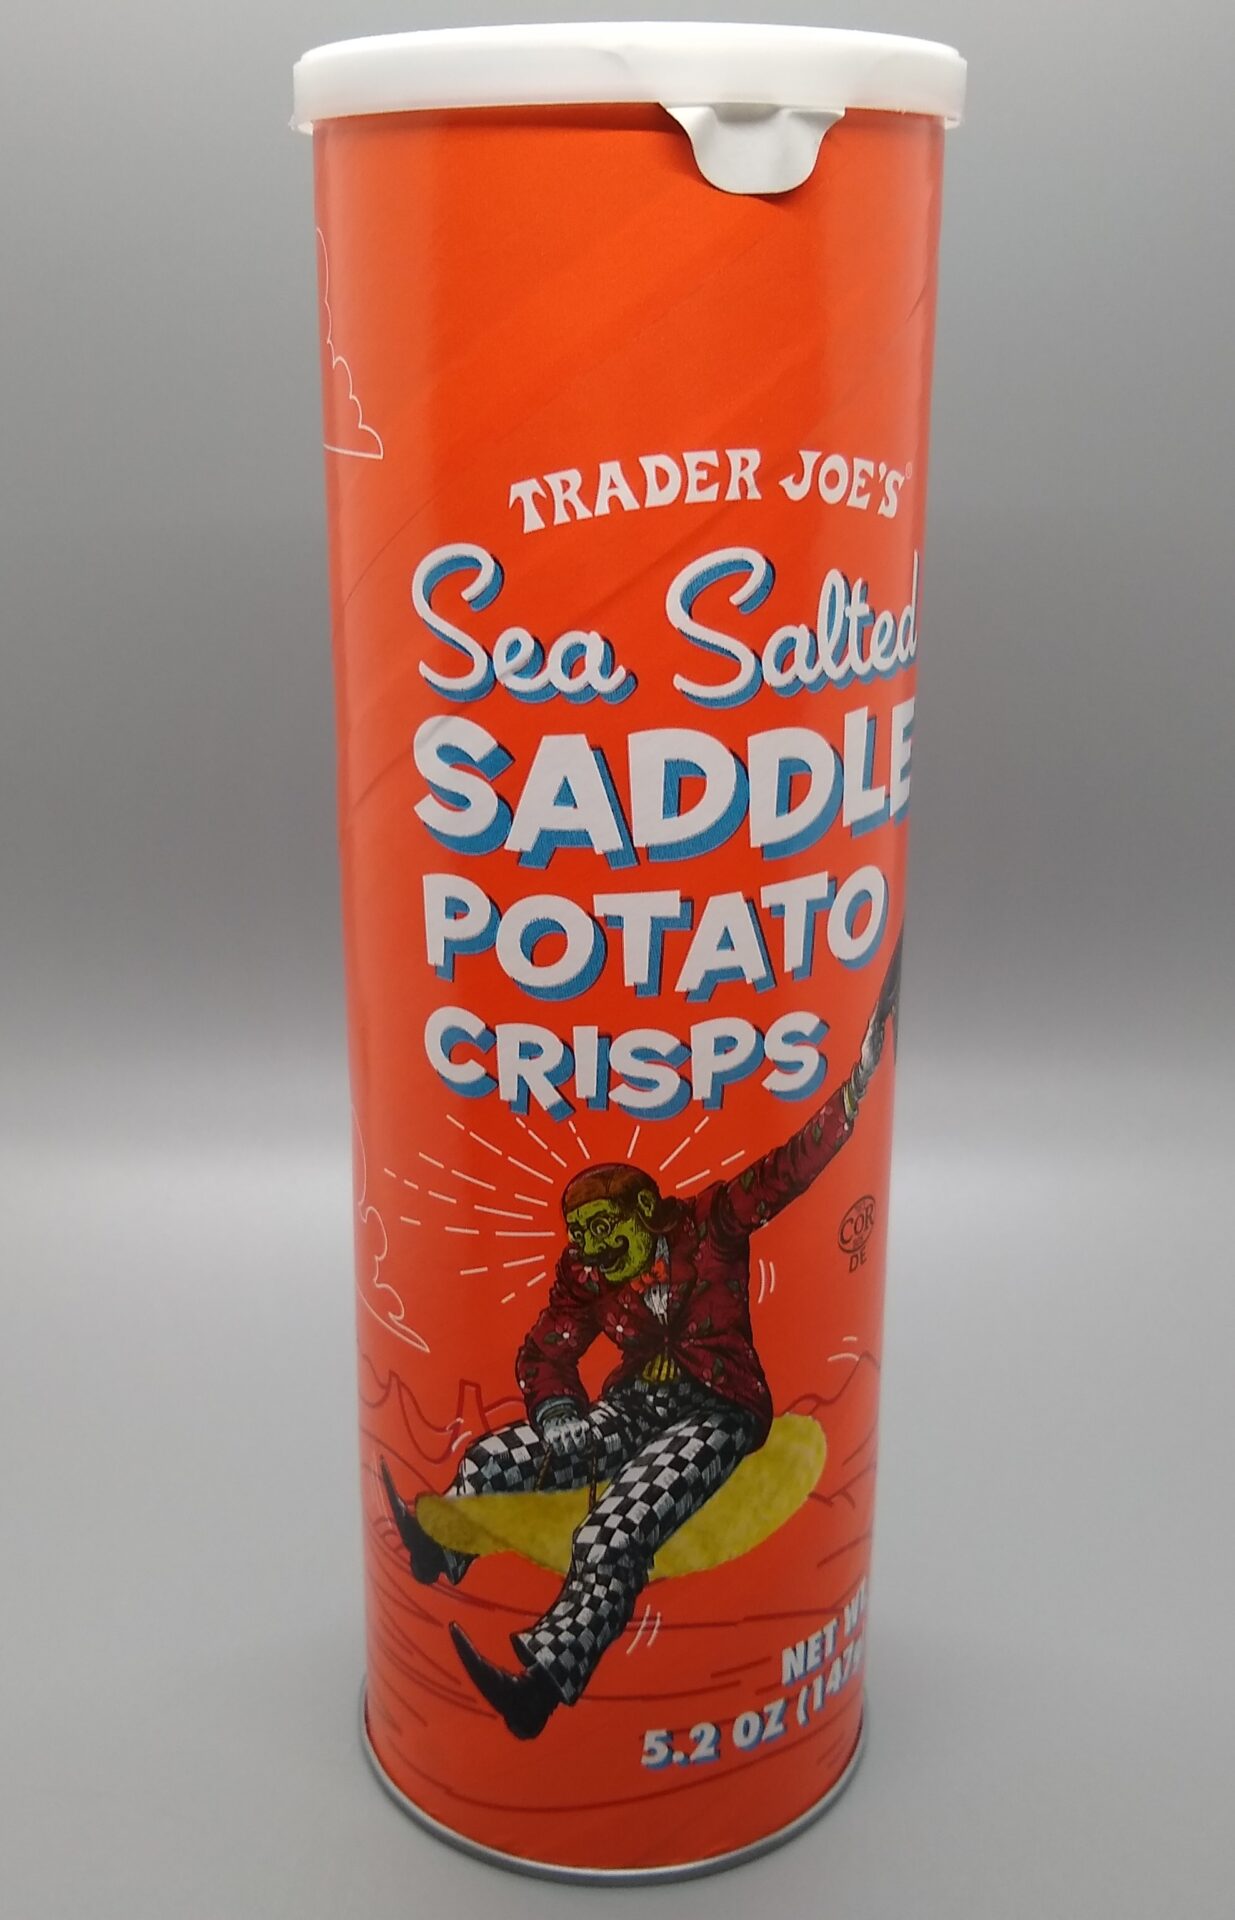 Trader Joe's Sea Salted Saddle Potato Crisps